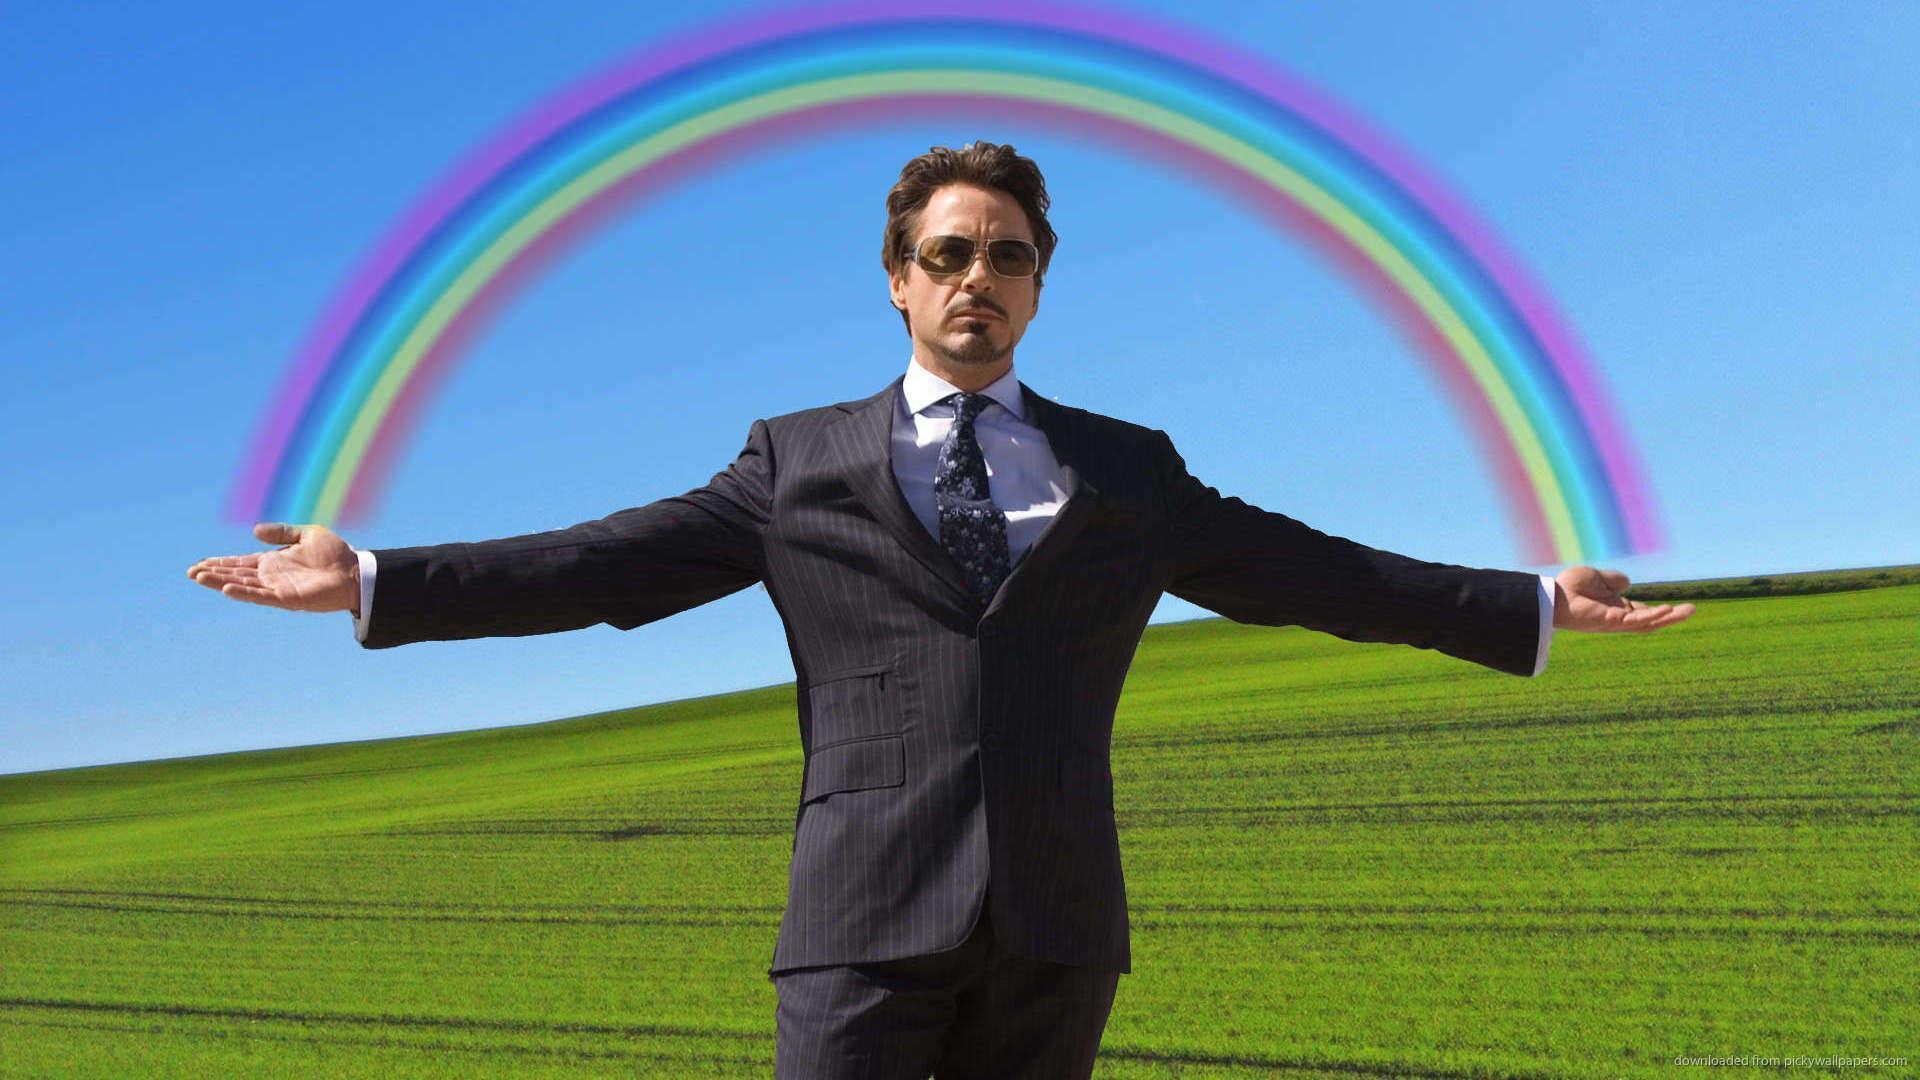 Tony Stark Holding A Rainbow Wallpaper For Blackberry Torch